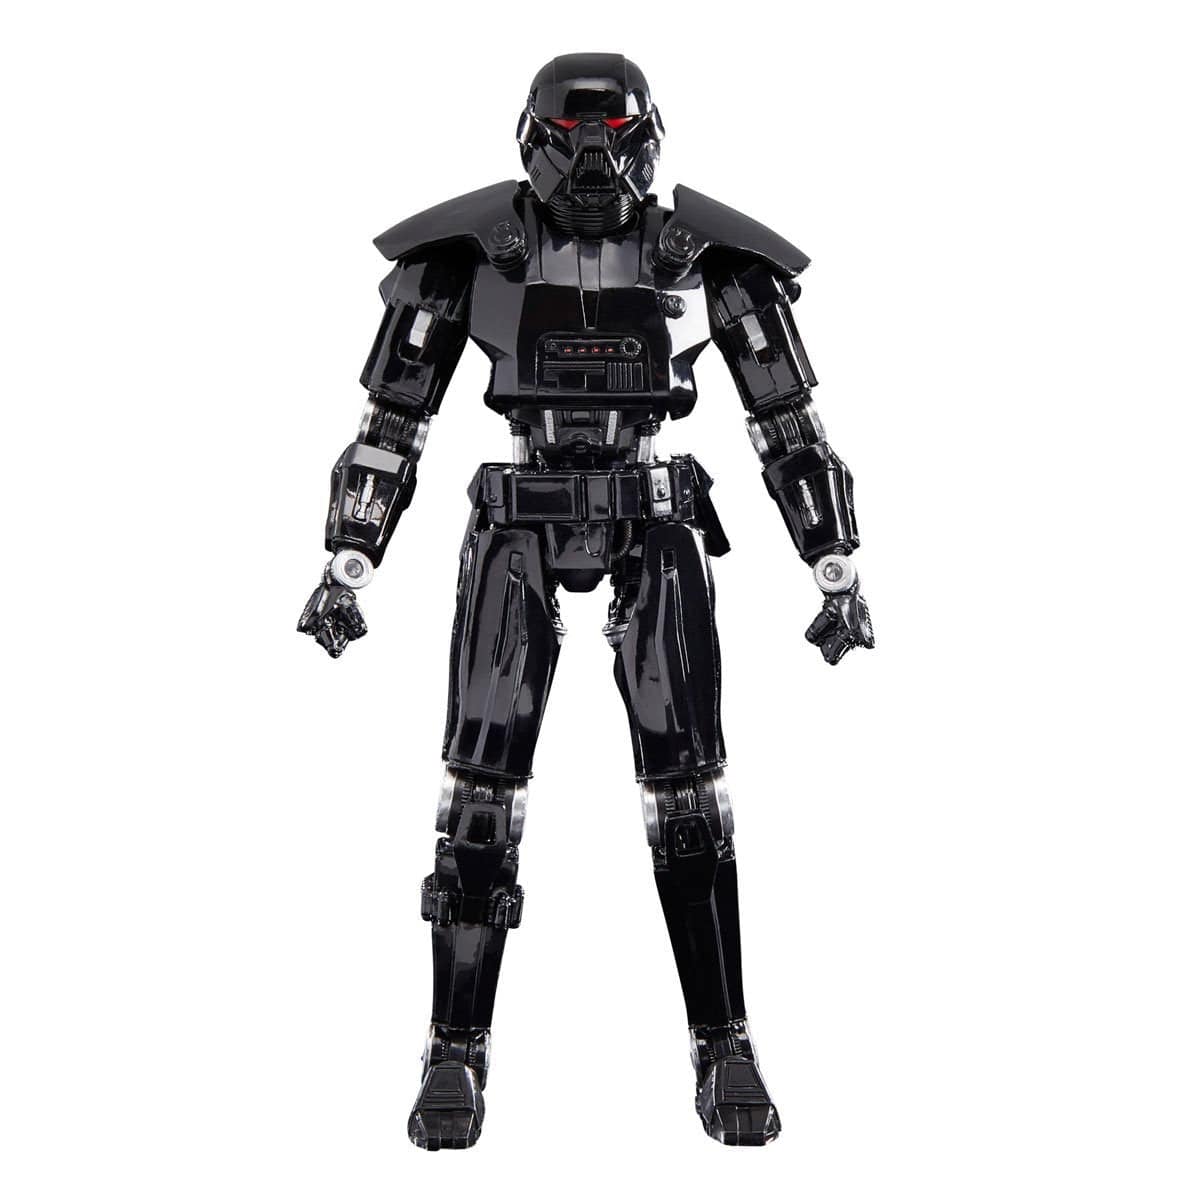 Star Wars The Black Series Dark Trooper 6-inch action figure - Pop-O-Loco - Hasbro